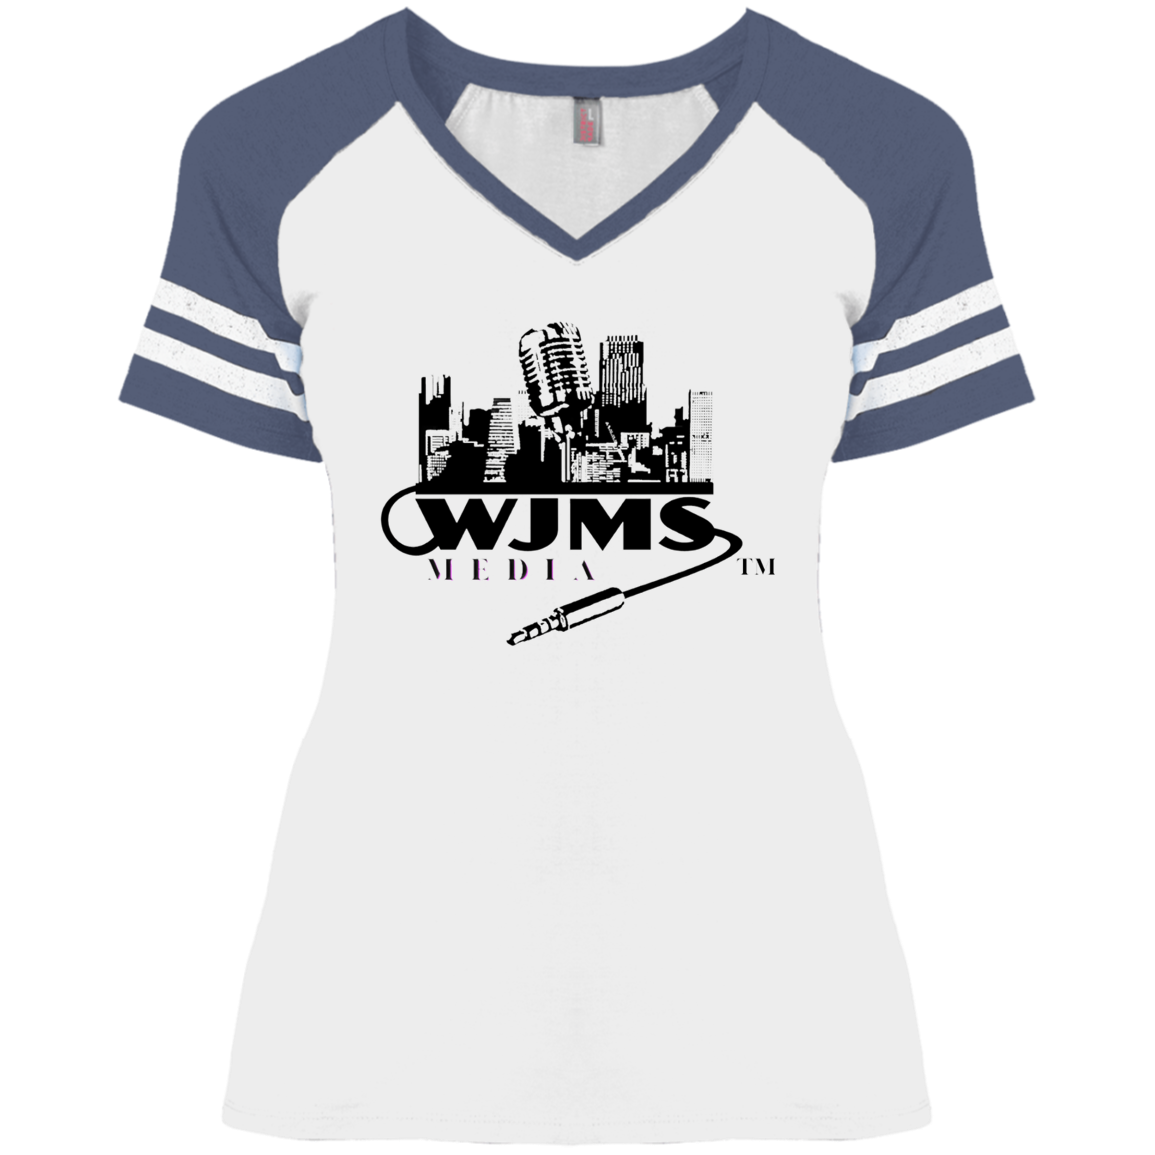 WJMS Ladies' Game V-Neck T-Shirt